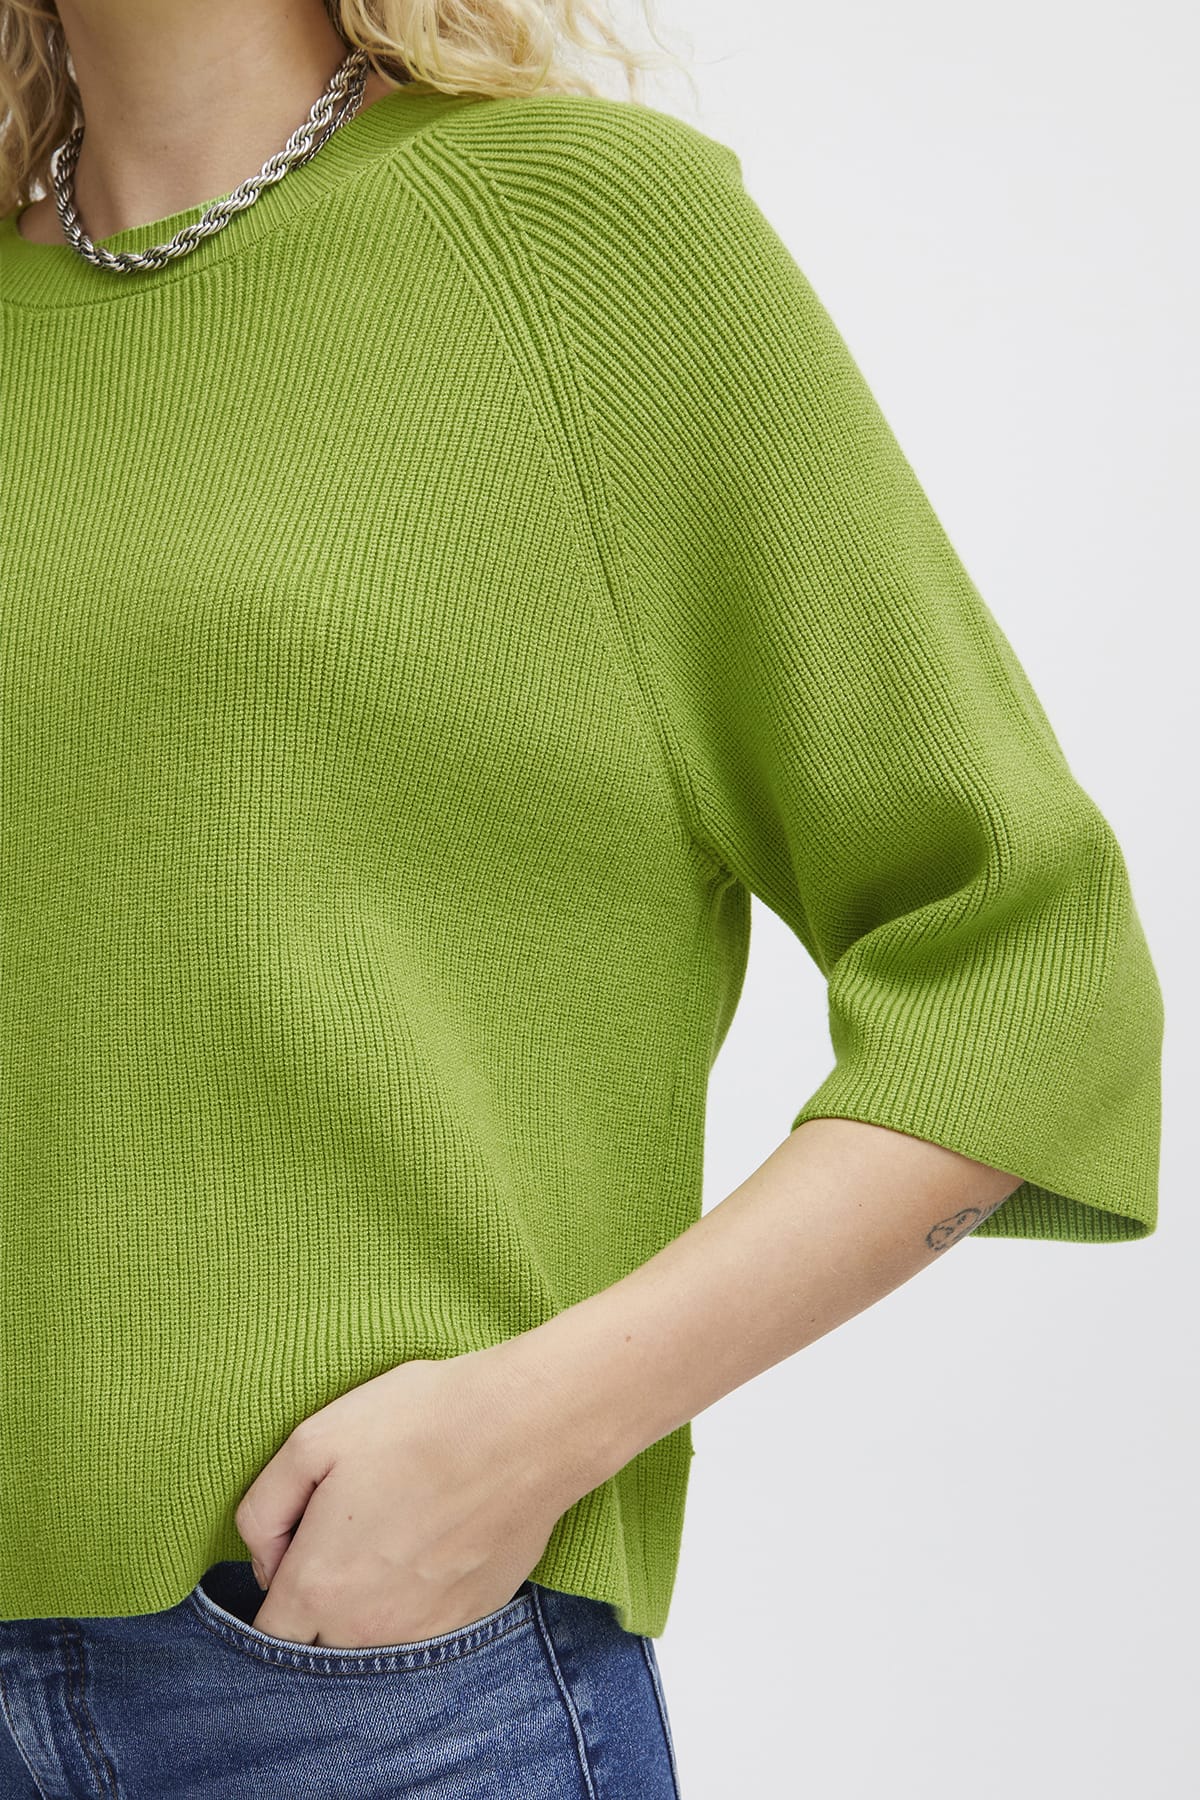 Sweatshirt IHBOSTON MS Parrot Green Sweatshirt ICHI 